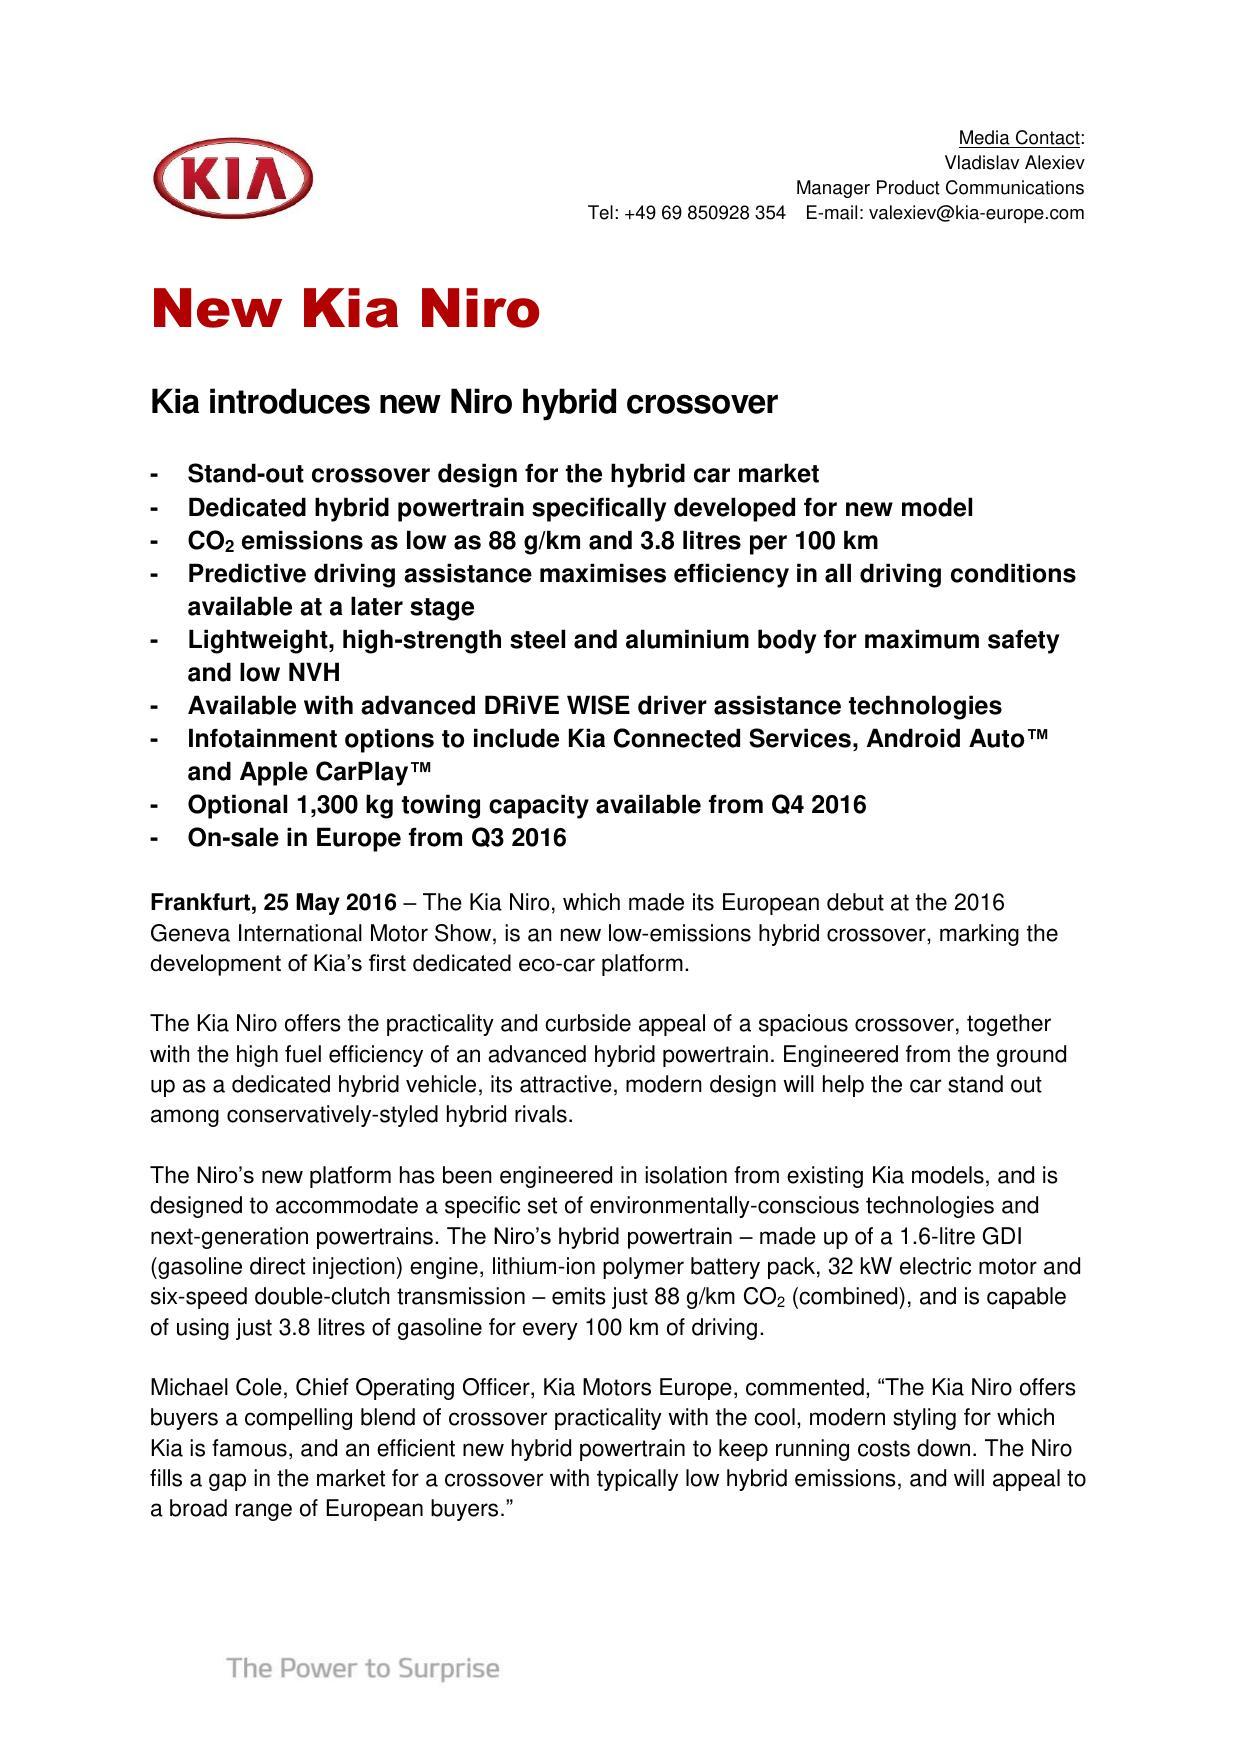 kia-niro-hybrid-crossover-2016-owners-manual.pdf